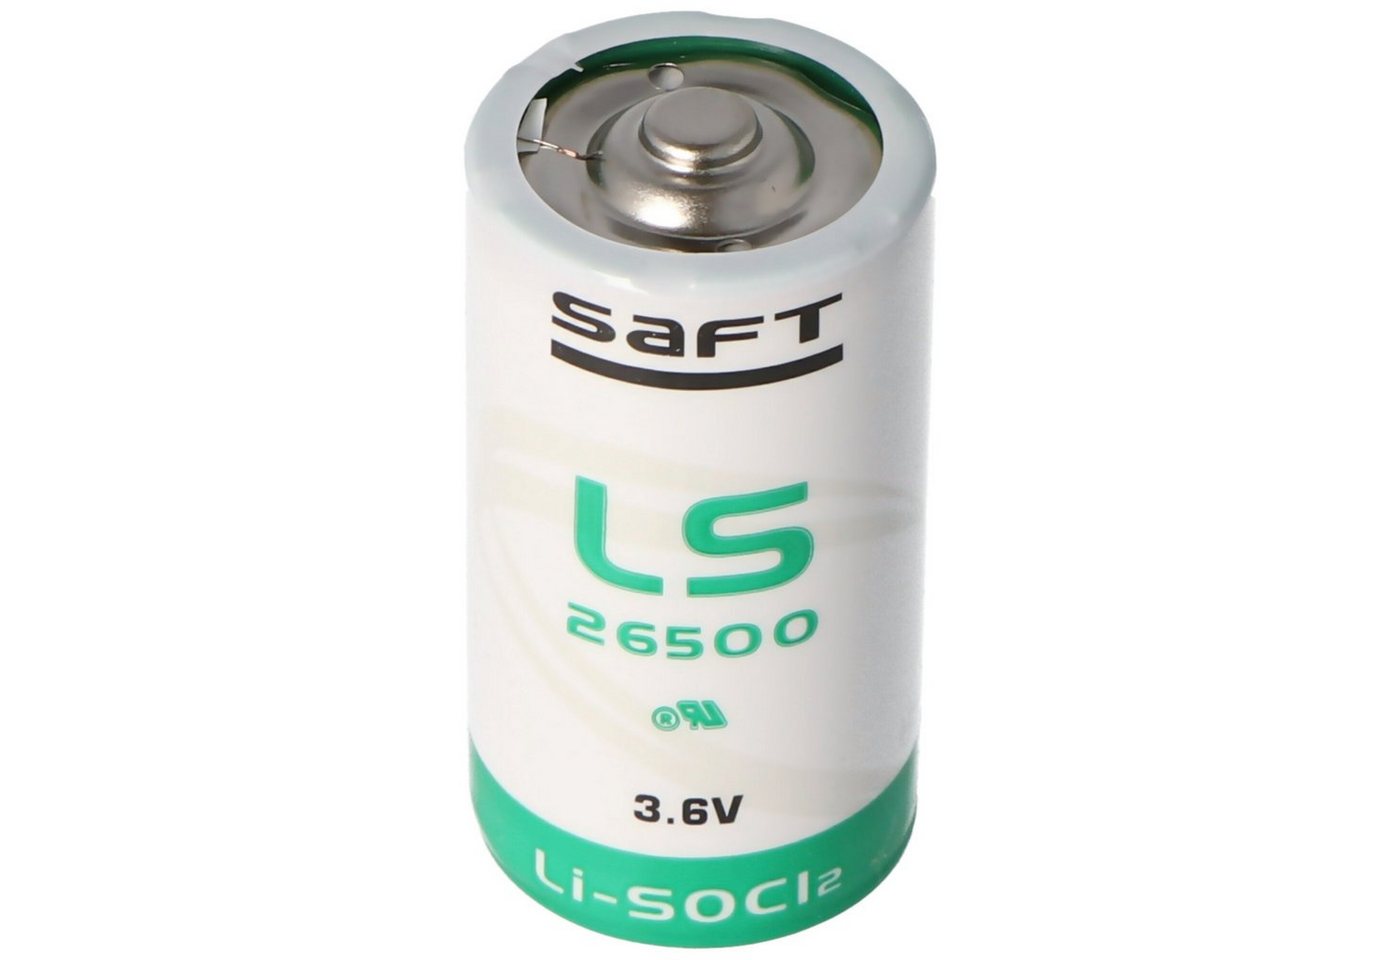 Saft SAFT LS26500 Lithium Batterie Li-SOCI2, C-Size bobbin cell Batterie, (3,6 V) von Saft